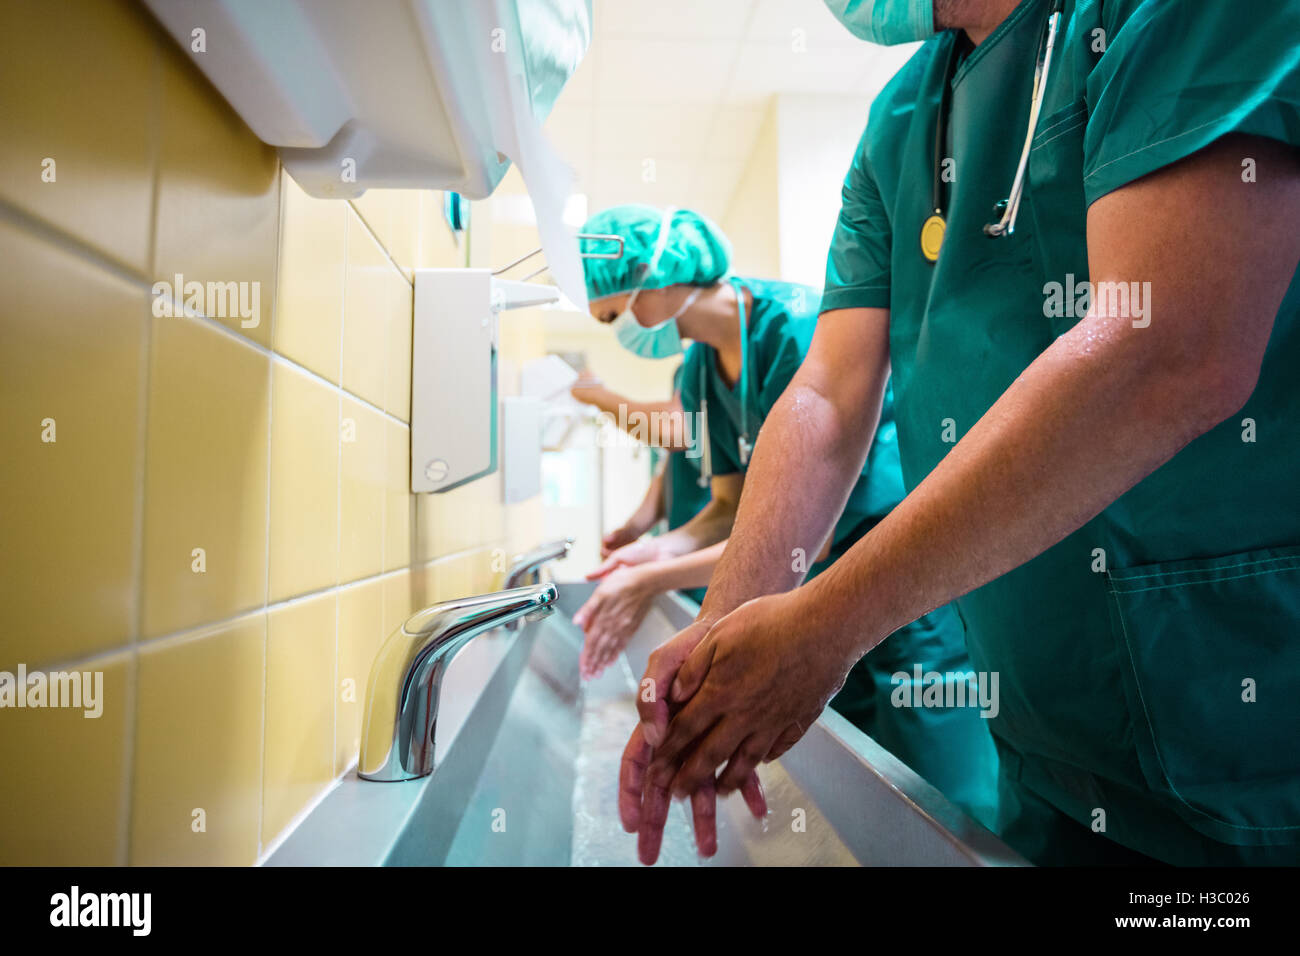 Group of surgeons washing their hands at washbasin Stock Photo